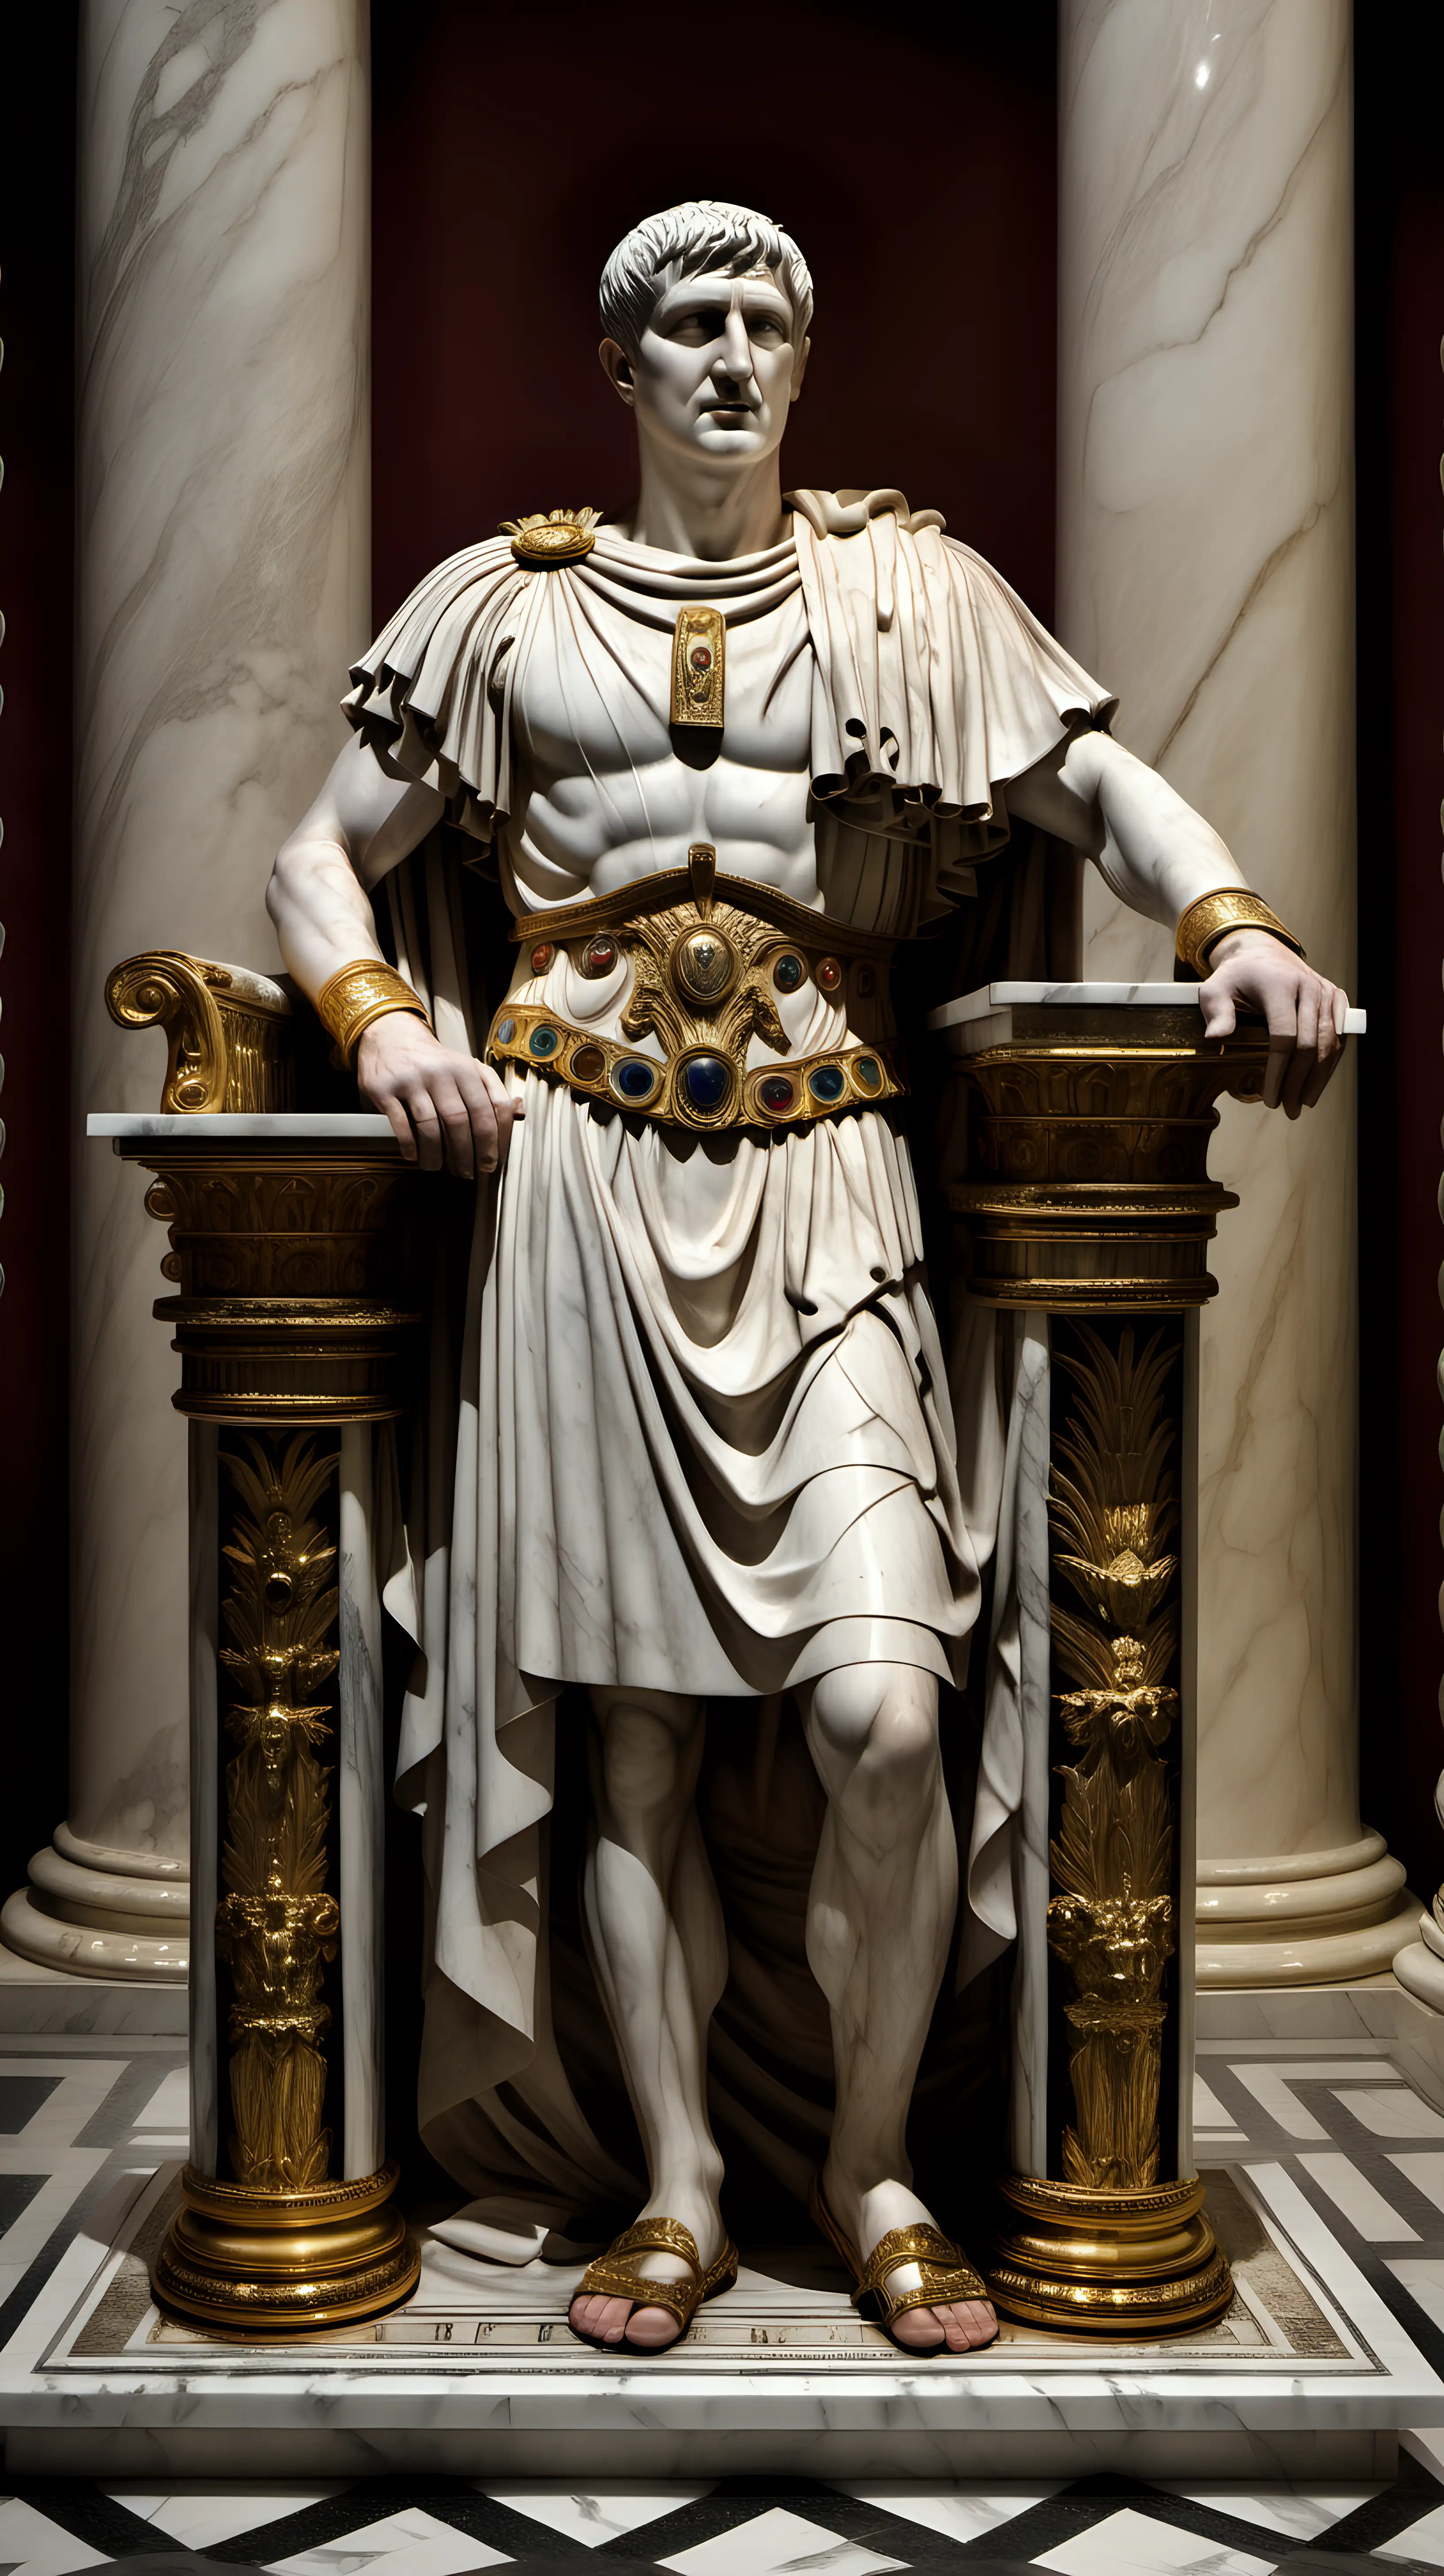 Roman Emperor Trajan in Majestic Parade on Sumptuous Throne